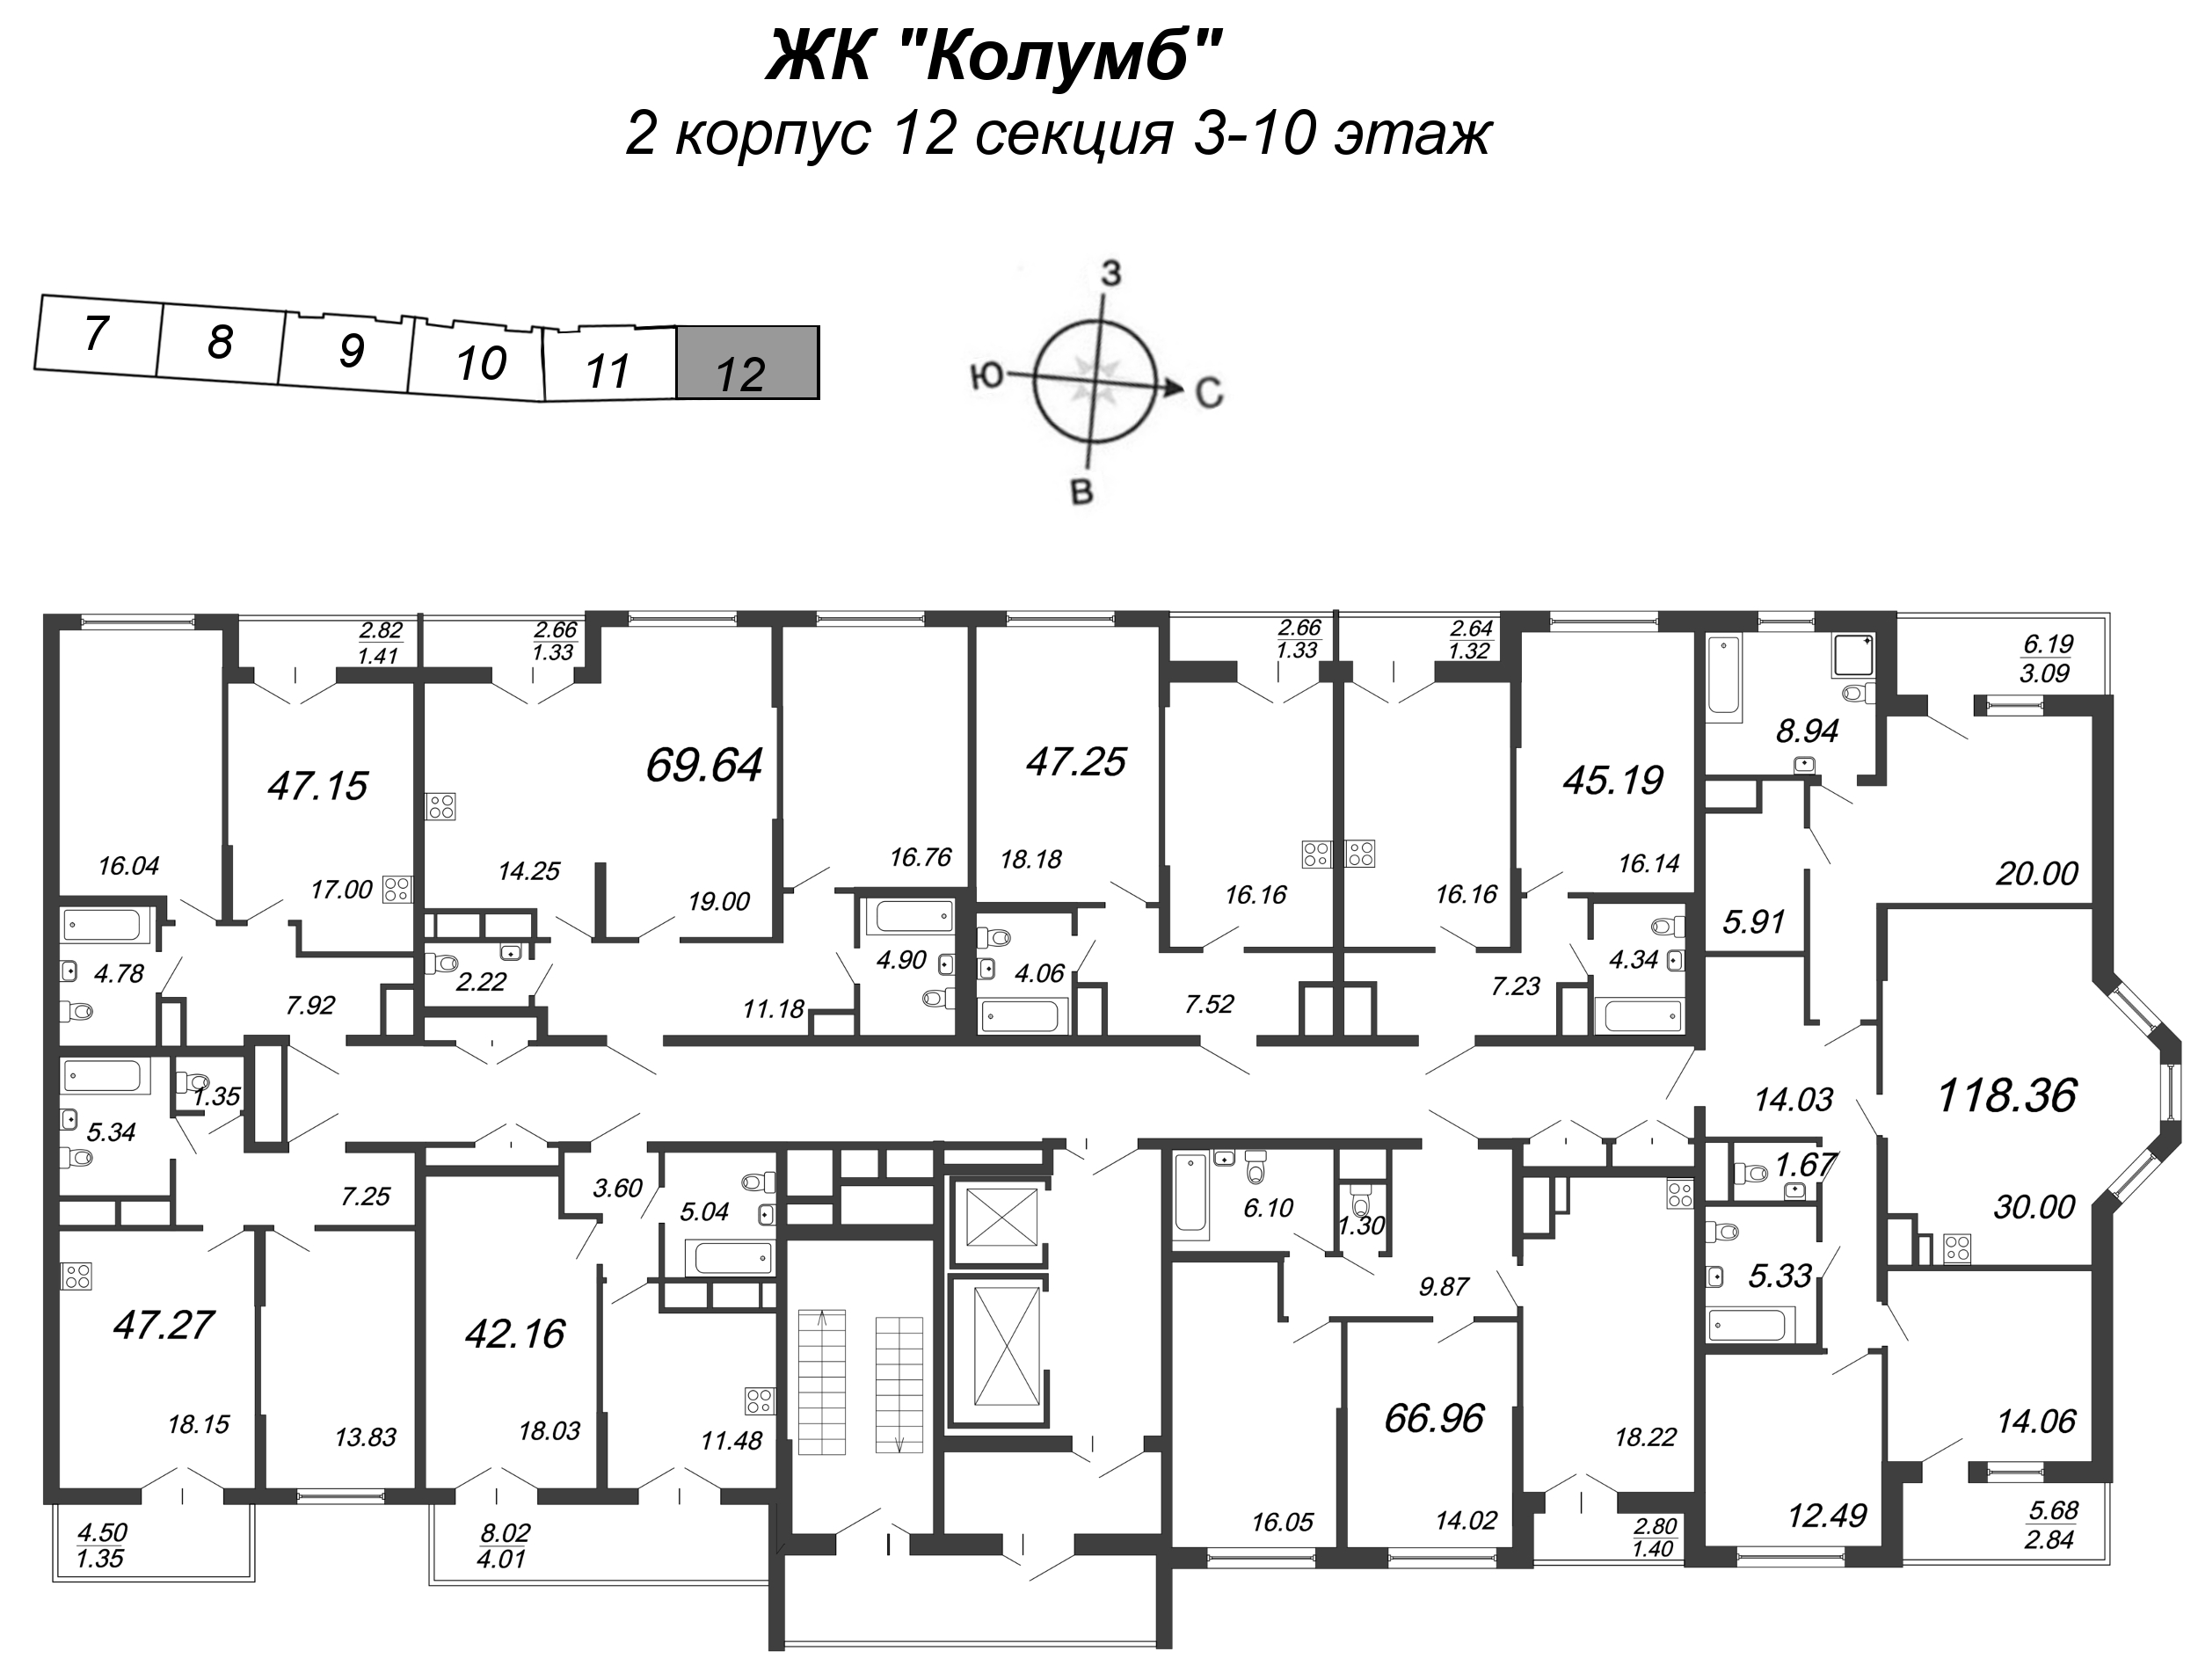 2-комнатная квартира, 70.5 м² в ЖК "Колумб" - планировка этажа